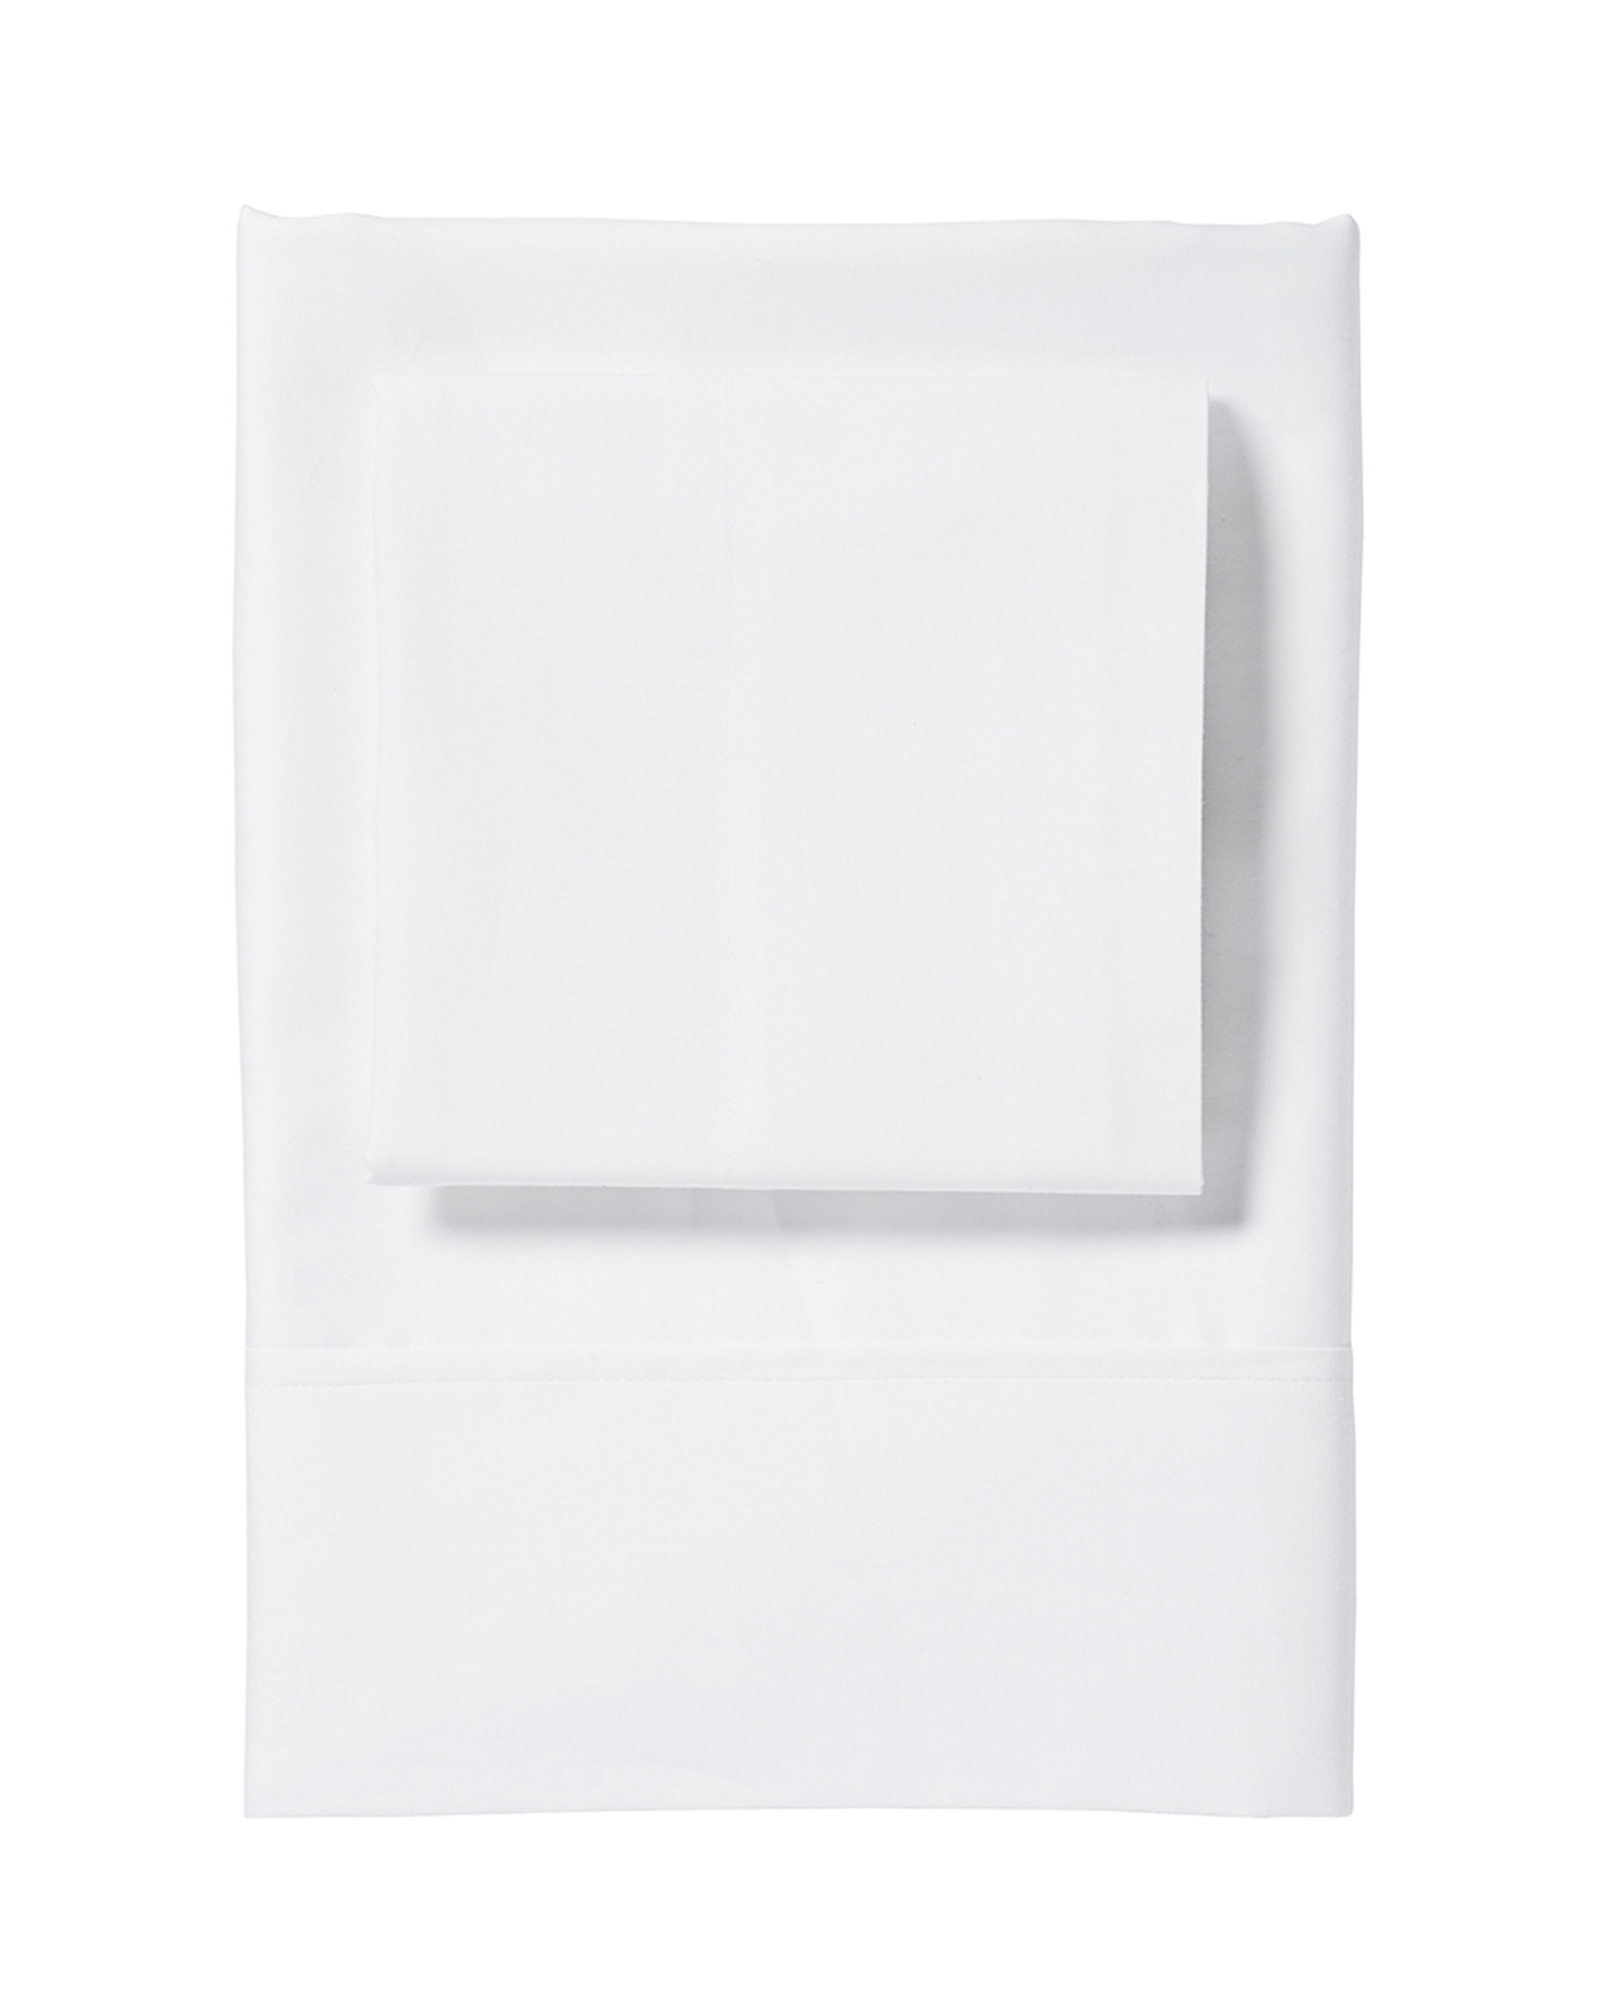 Classic White Sateen Queen Sheet Set - Image 3